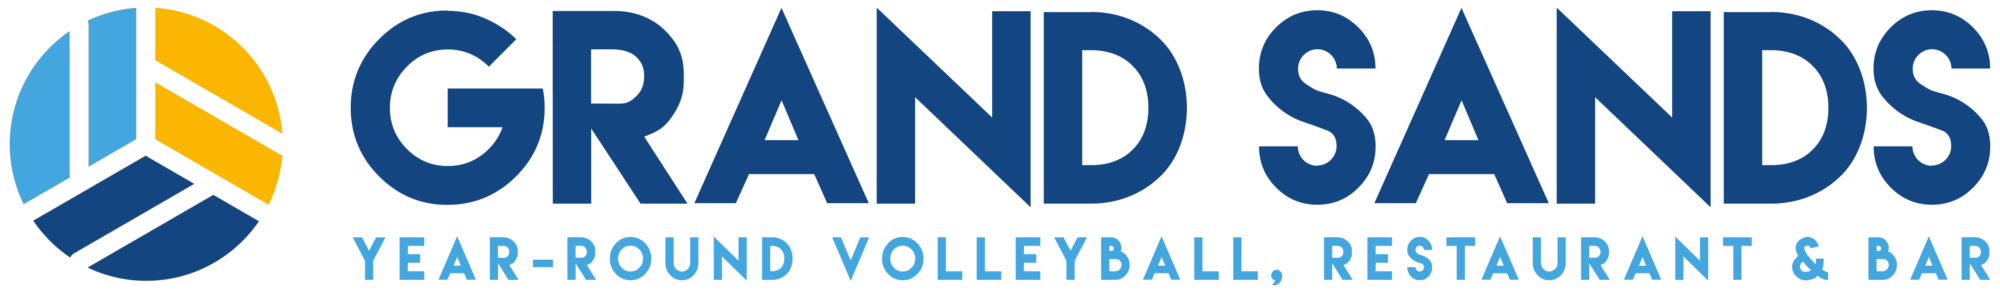 designs – Grand Sands Volleyball